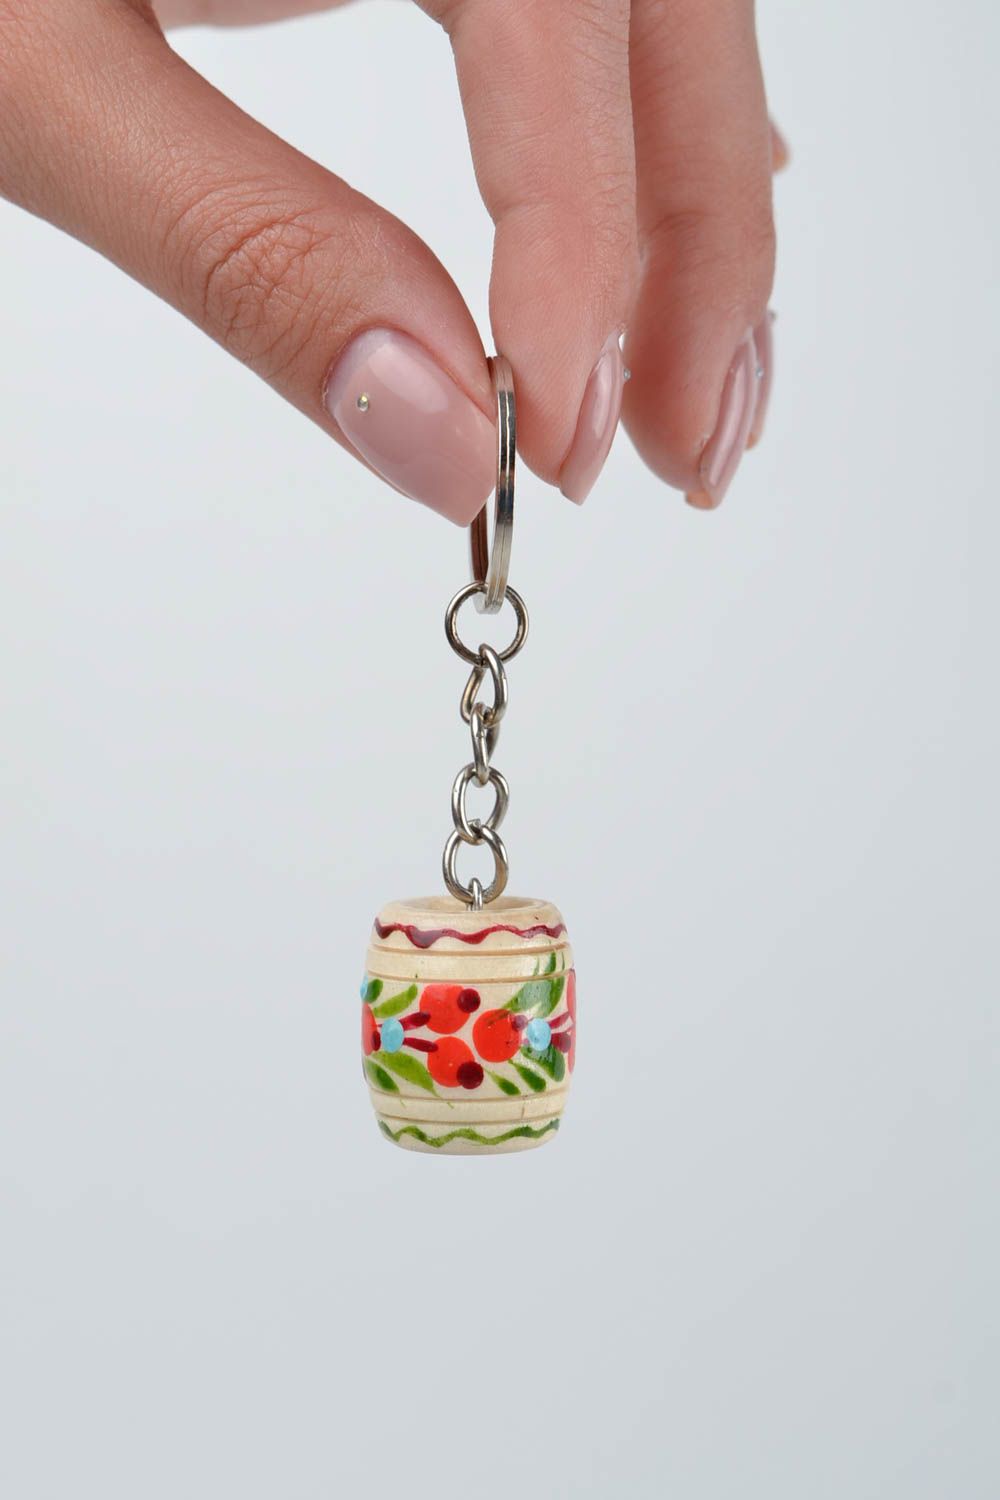 Unusual handmade wooden keychain popular keychain fashion accessories gift ideas photo 2